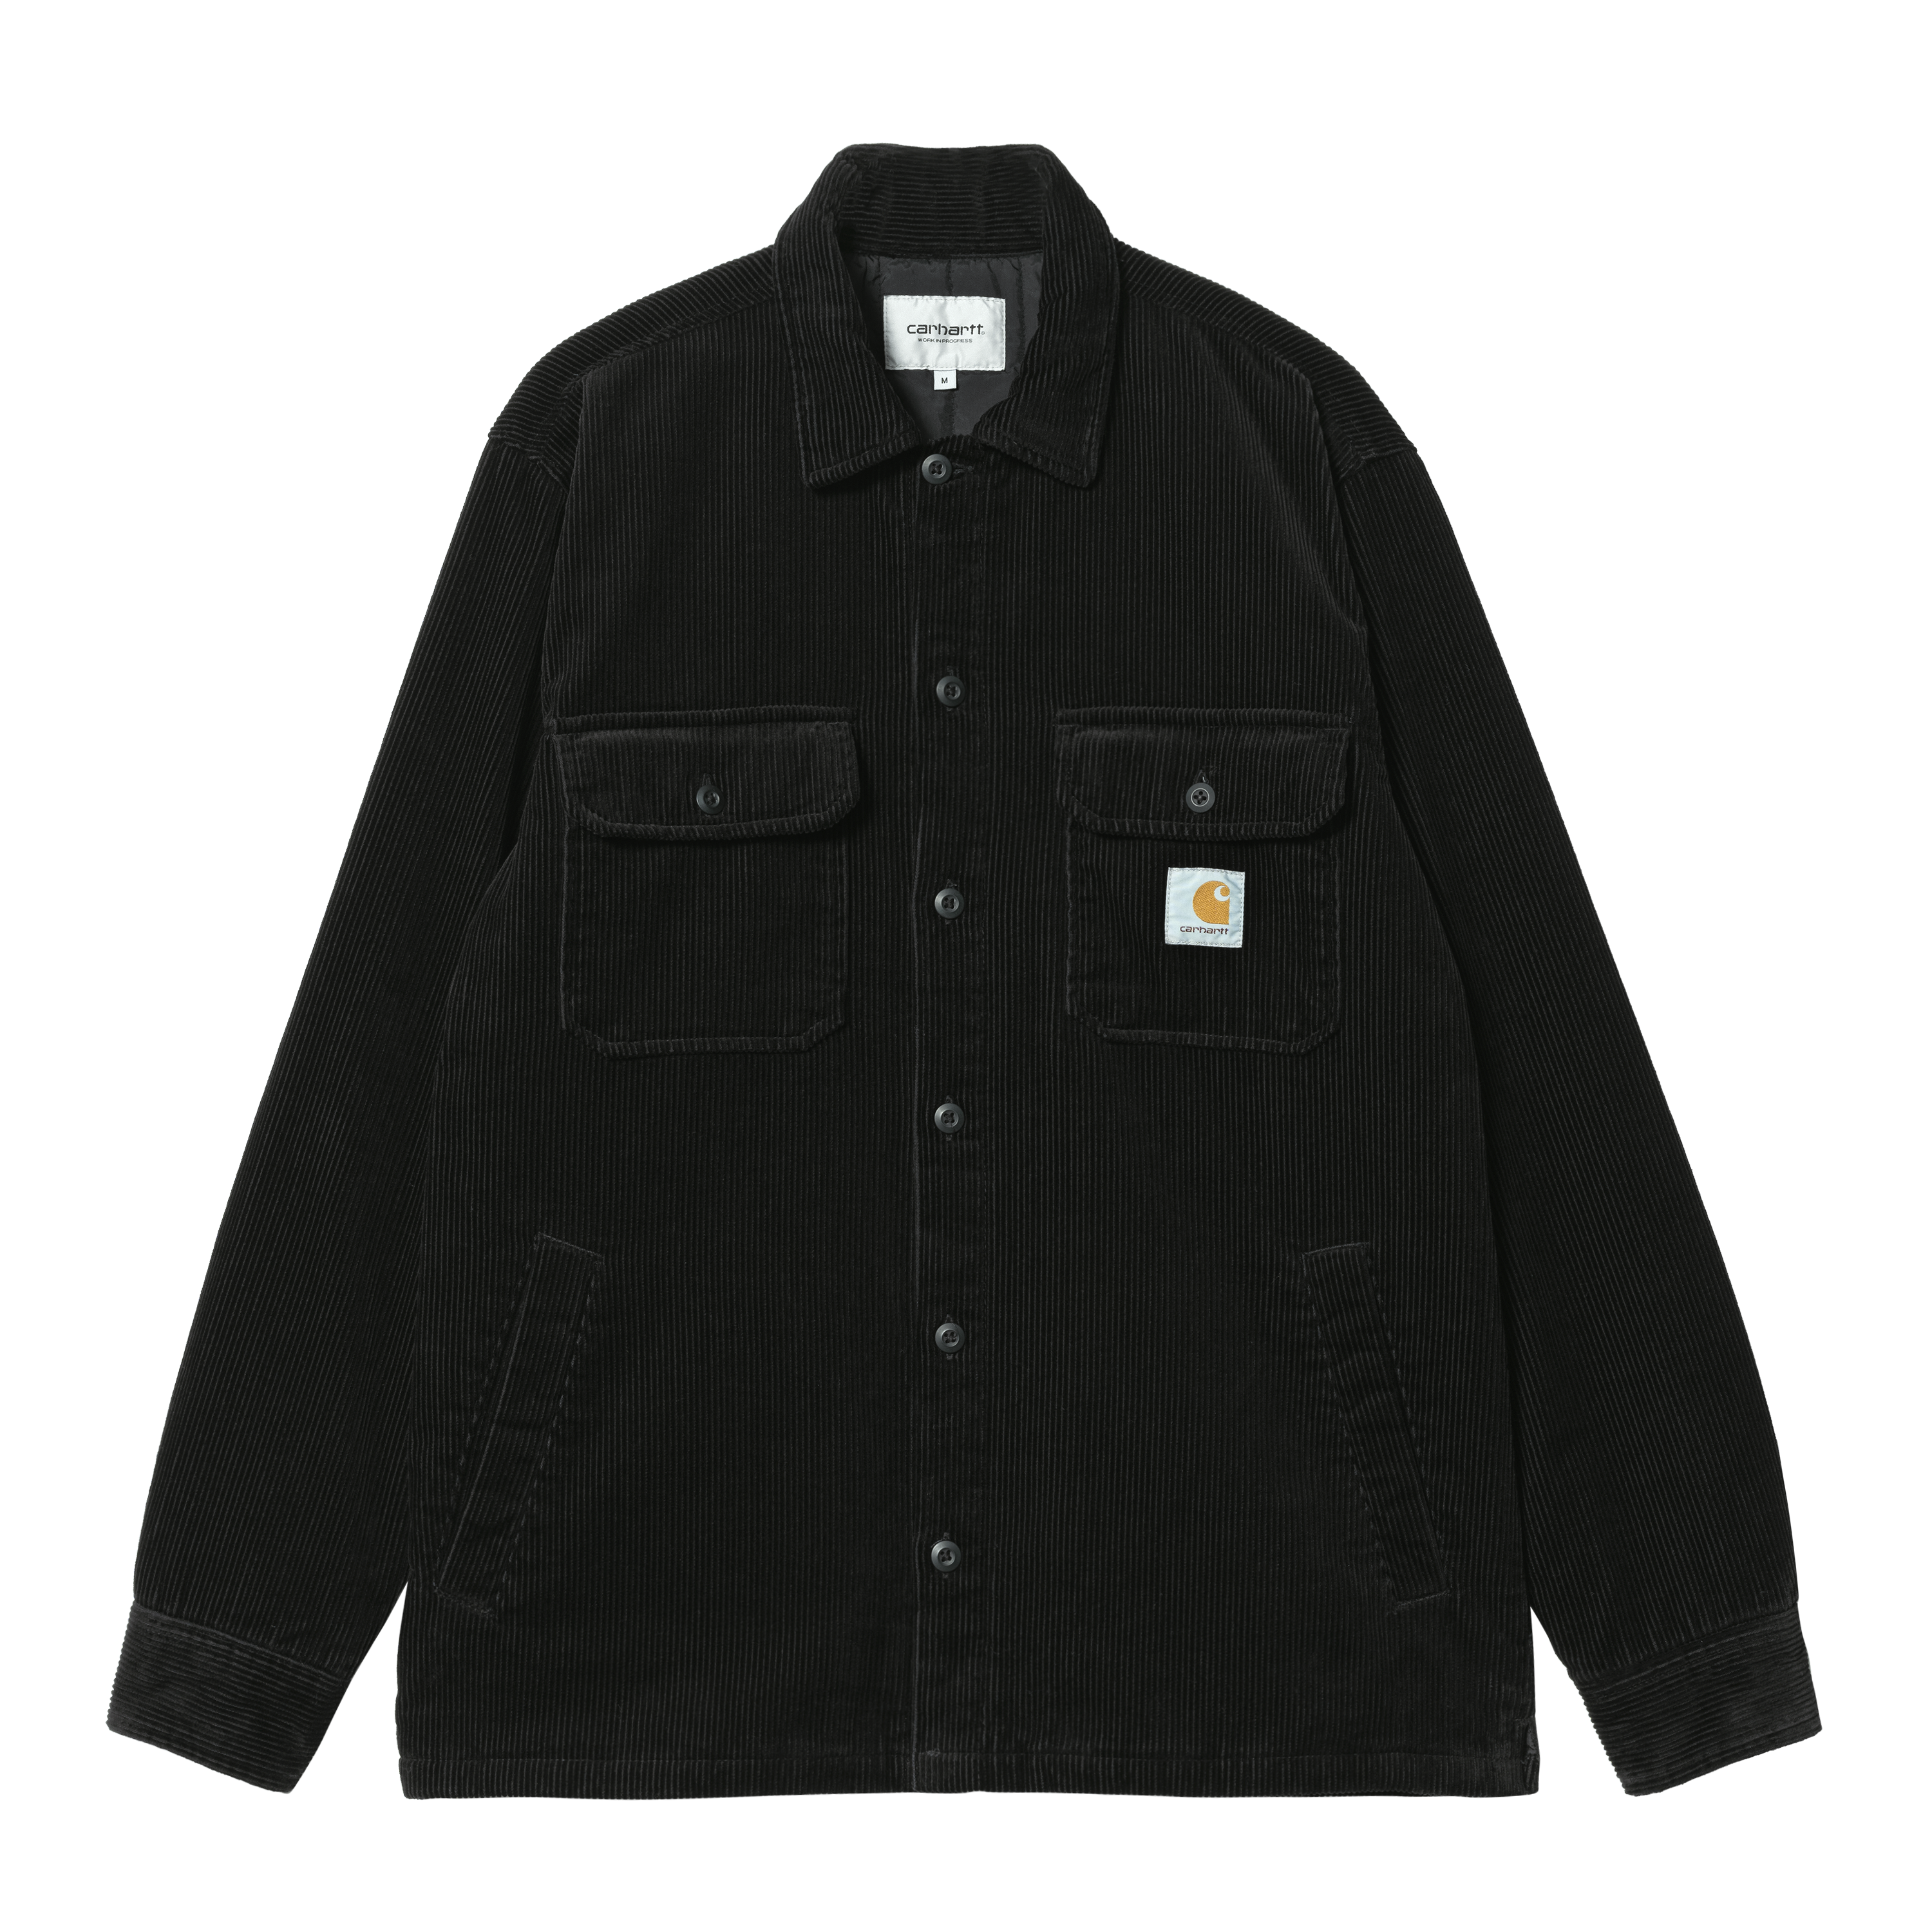 Unspoken  Carhartt WIP Whitsome Shirt Jacket - Camo Unite